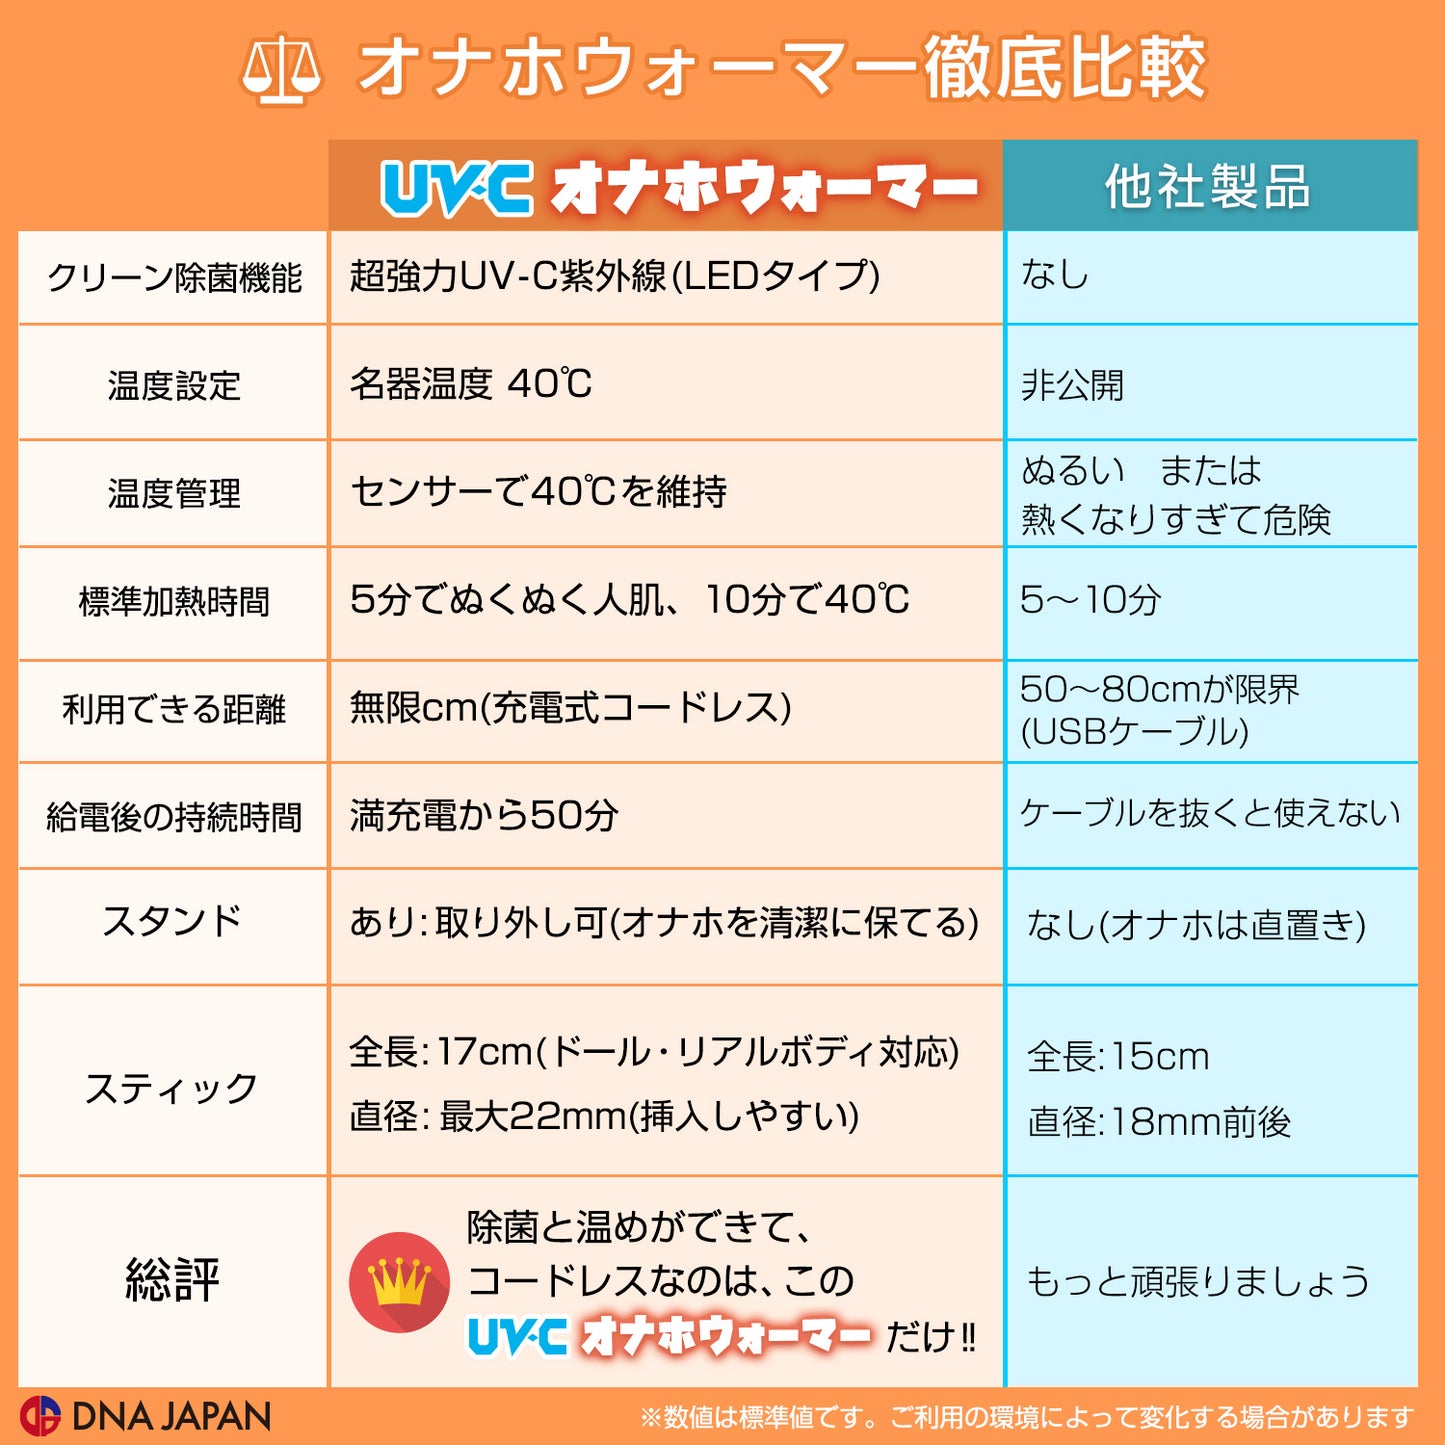 SSI JAPAN UV-C 紫外線飛機杯消毒加溫棒